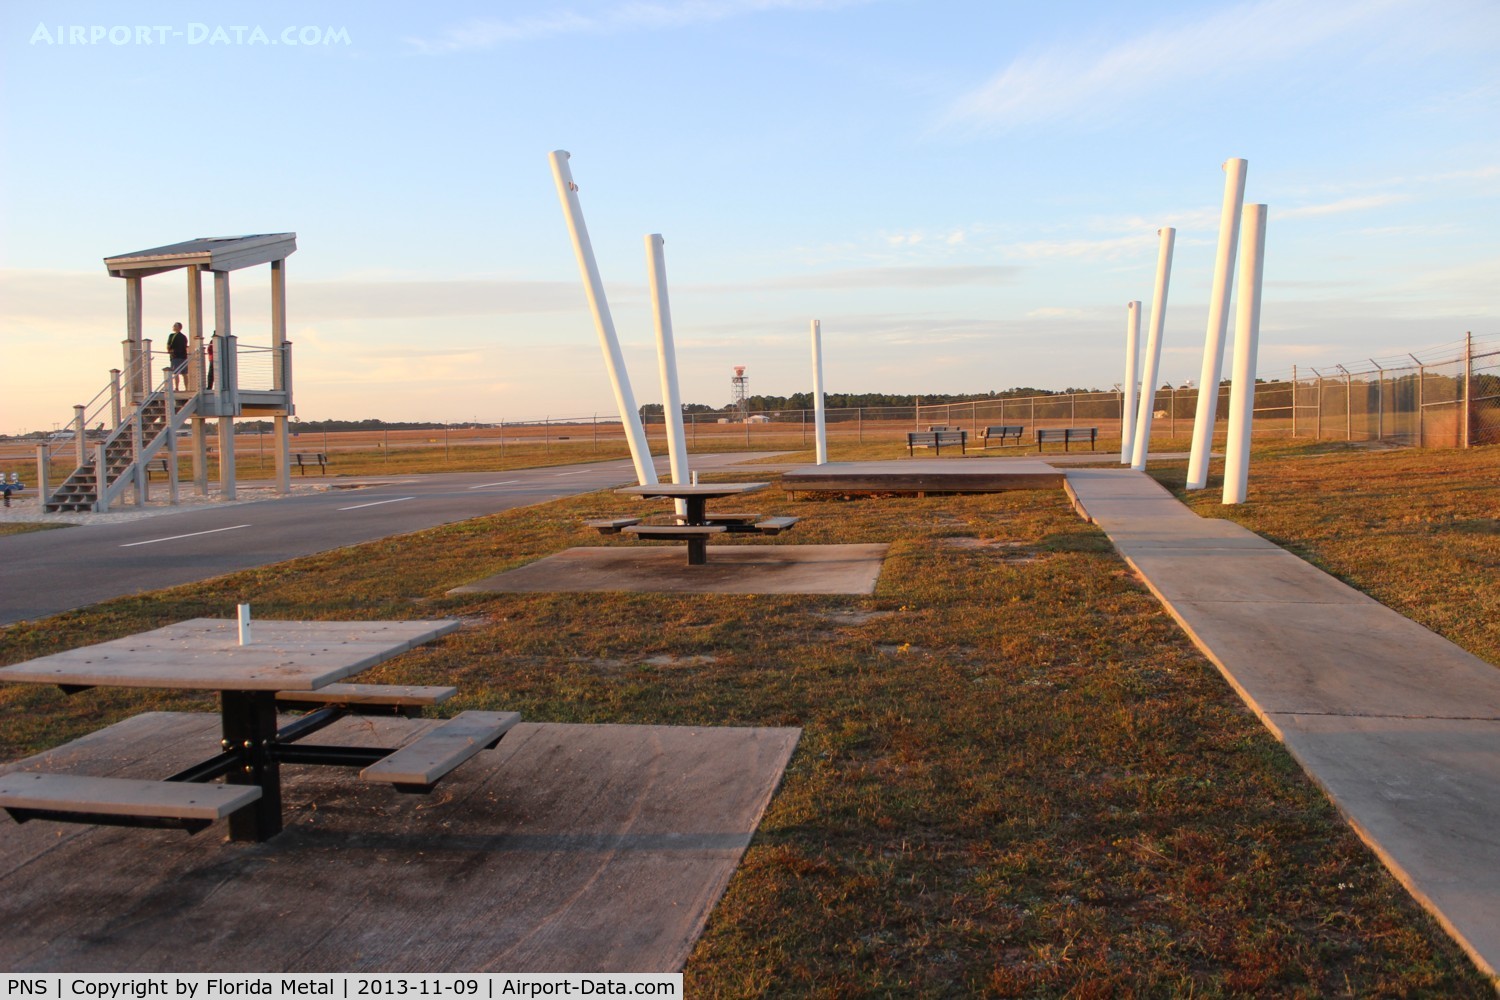 Pensacola Gulf Coast Regional Airport (PNS) - Aircraft viewing park at Pensacola Airport